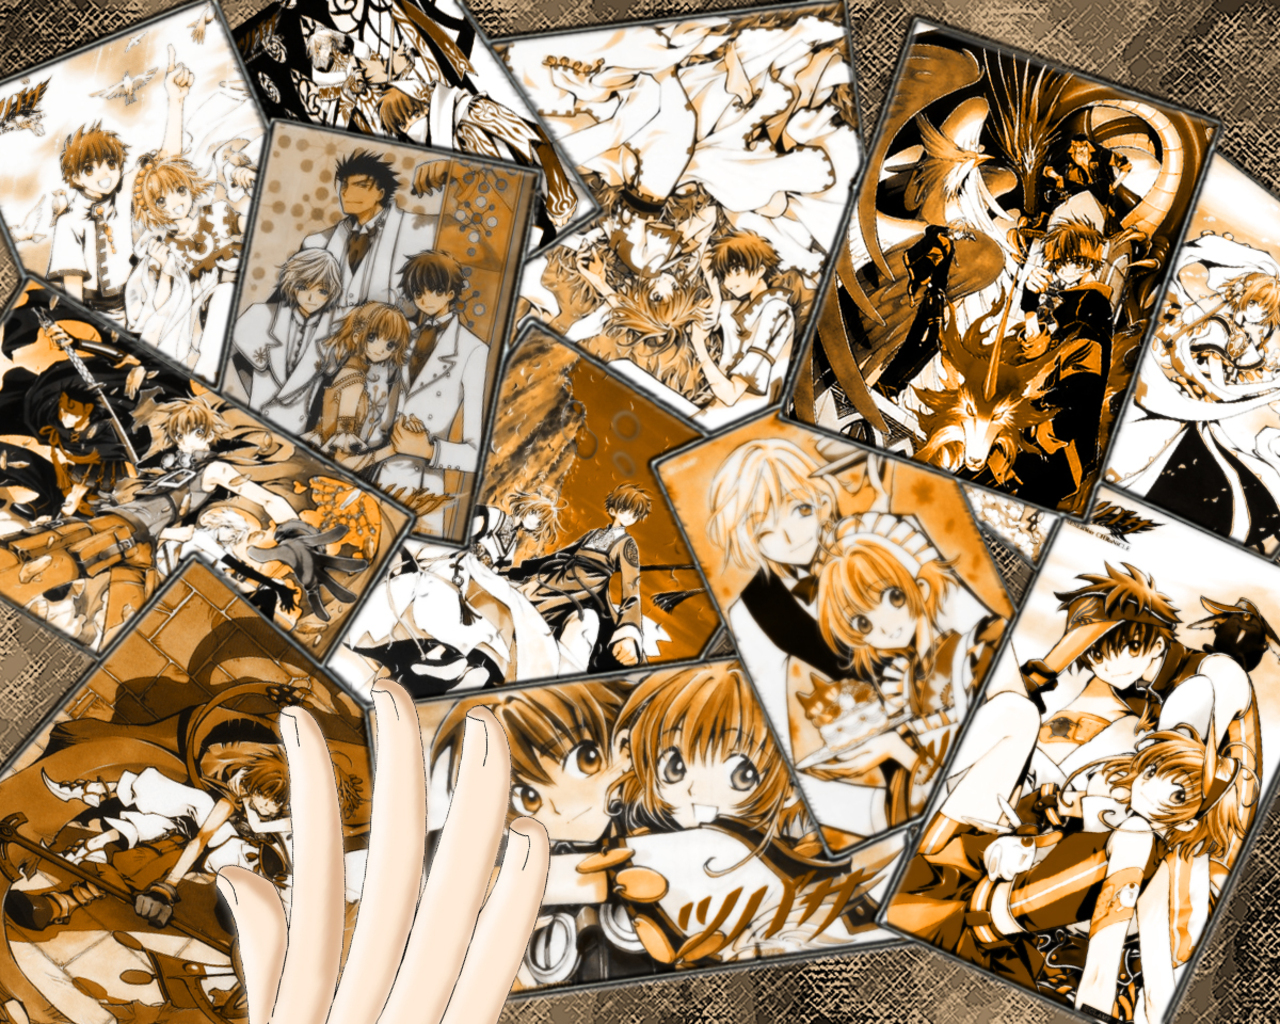 Tsubasa Reservoir Chronicle Wallpaper Anime Forums News